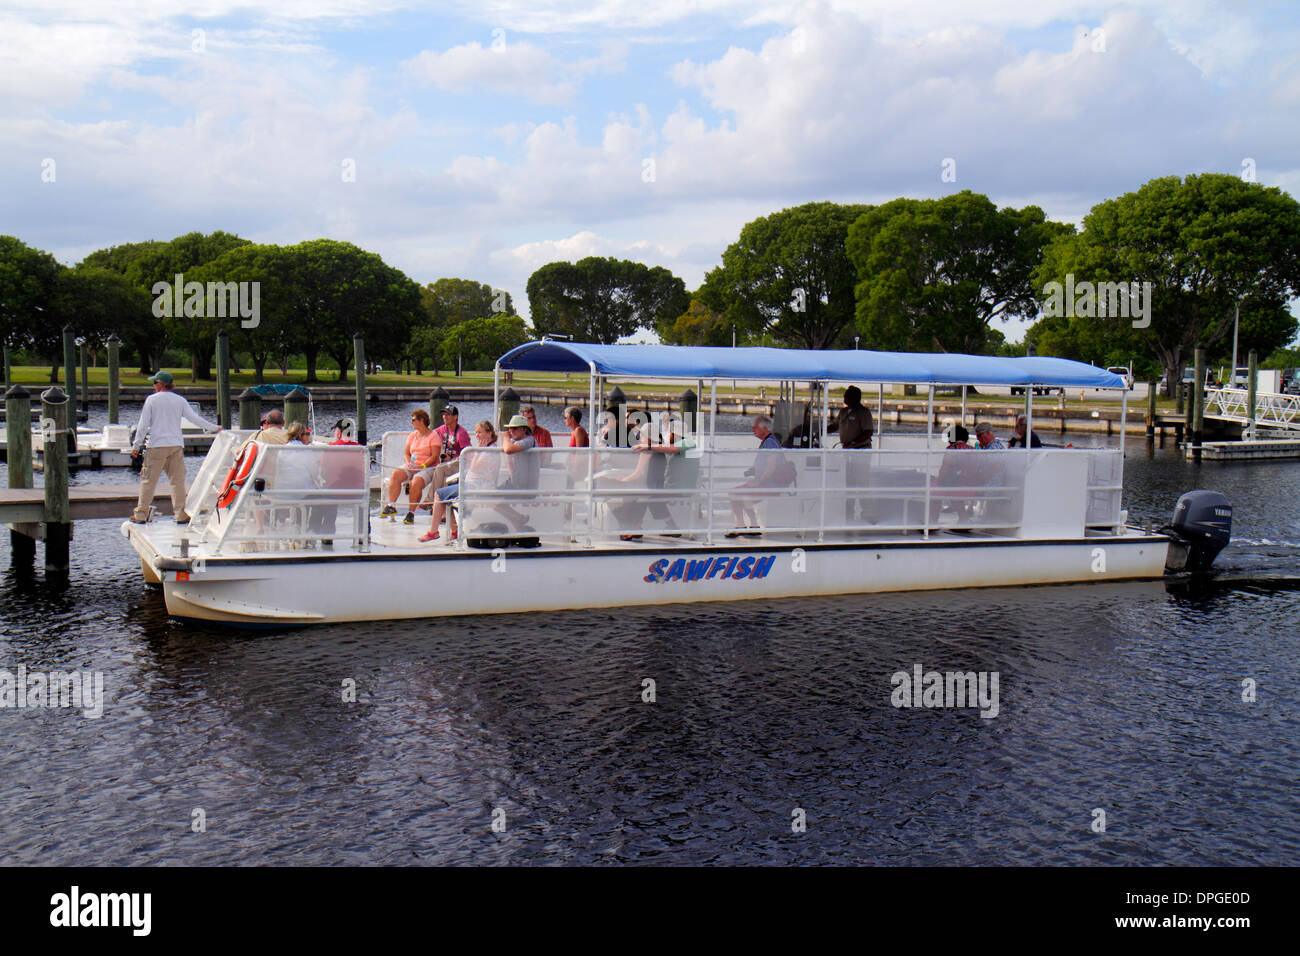 Miami Florida,Everglades National Park,Main Park Road,Flamingo,pontoon boat,passenger passengers rider riders,guide,marina,FL131031041 Stock Photo